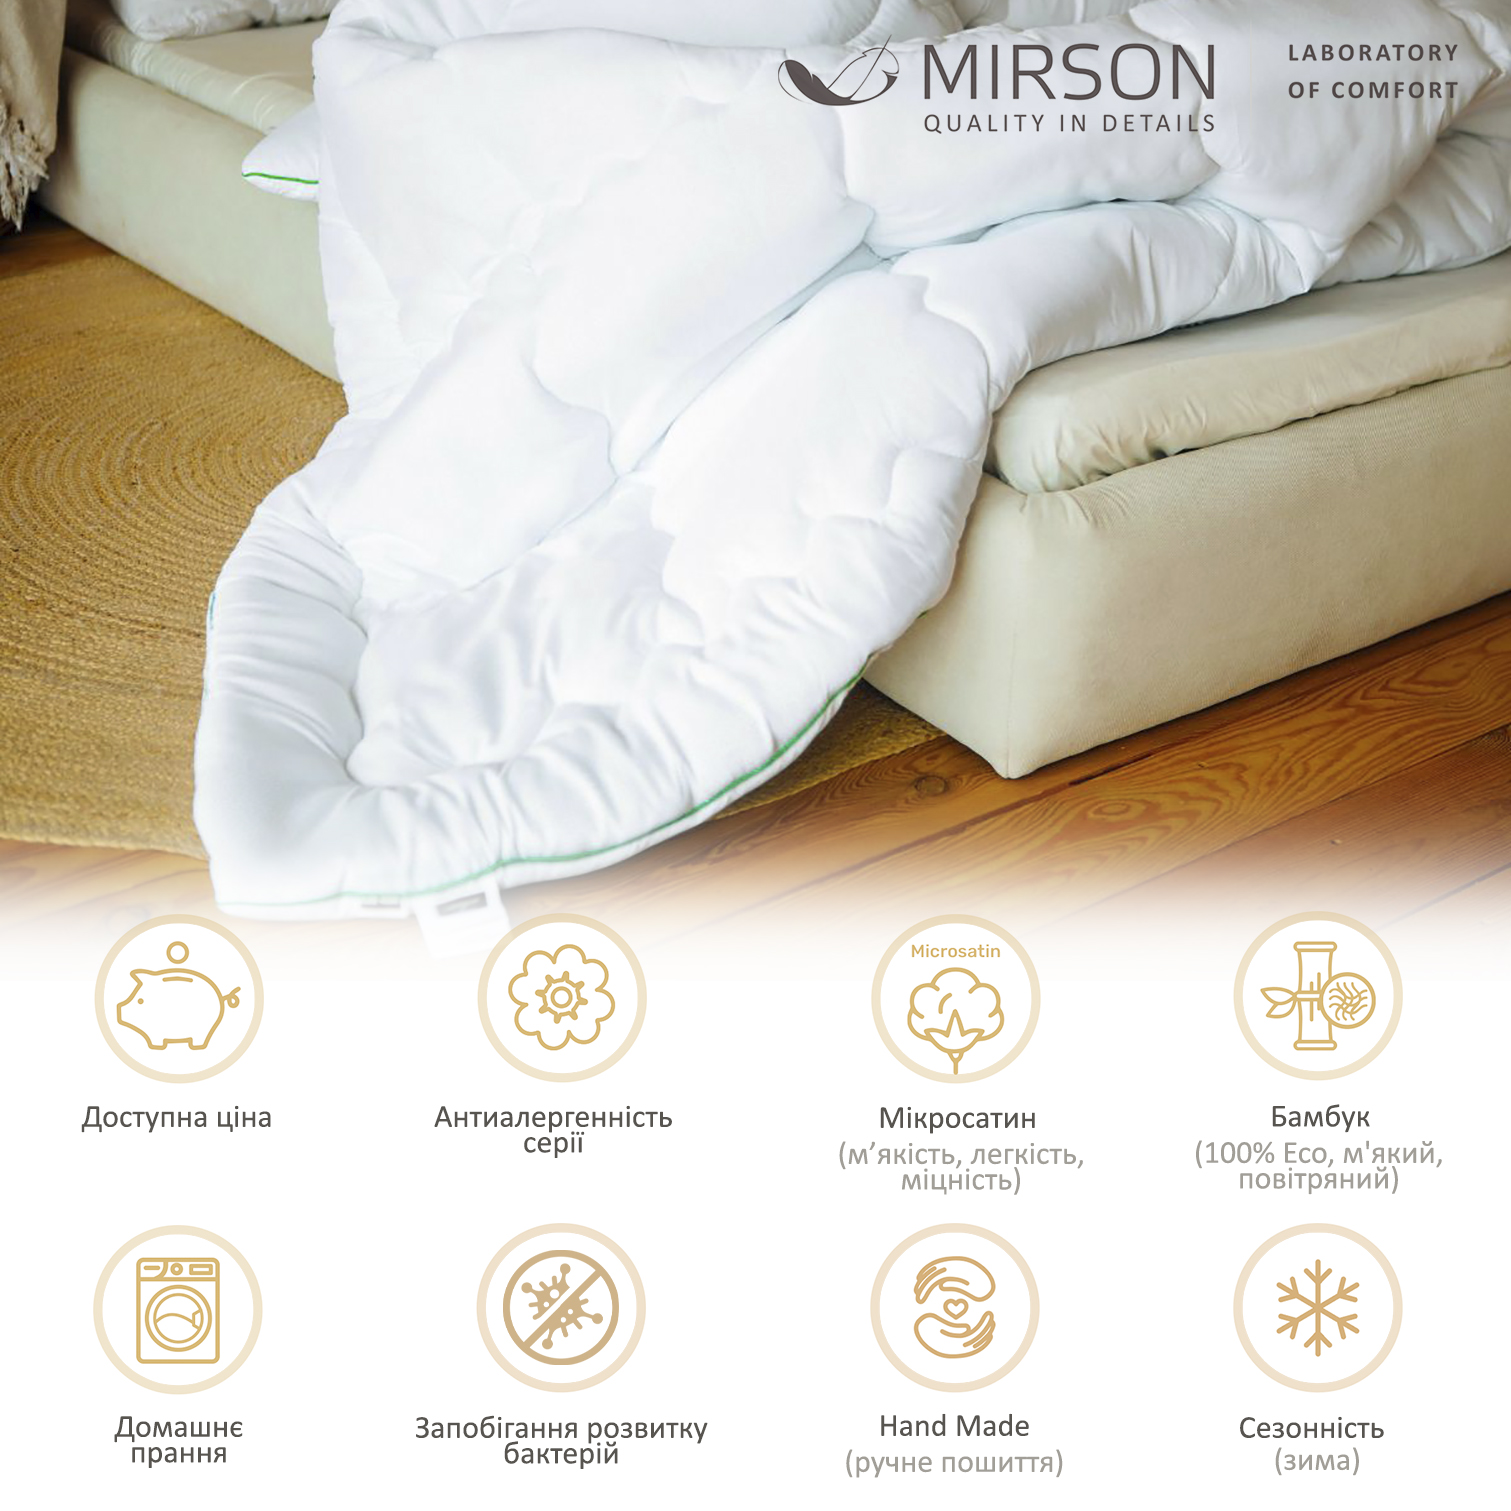 Одеяло бамбуковое MirSon Eco Mikrosatin Hand Made №0443, зимнее, 110x140 см, белое - фото 6